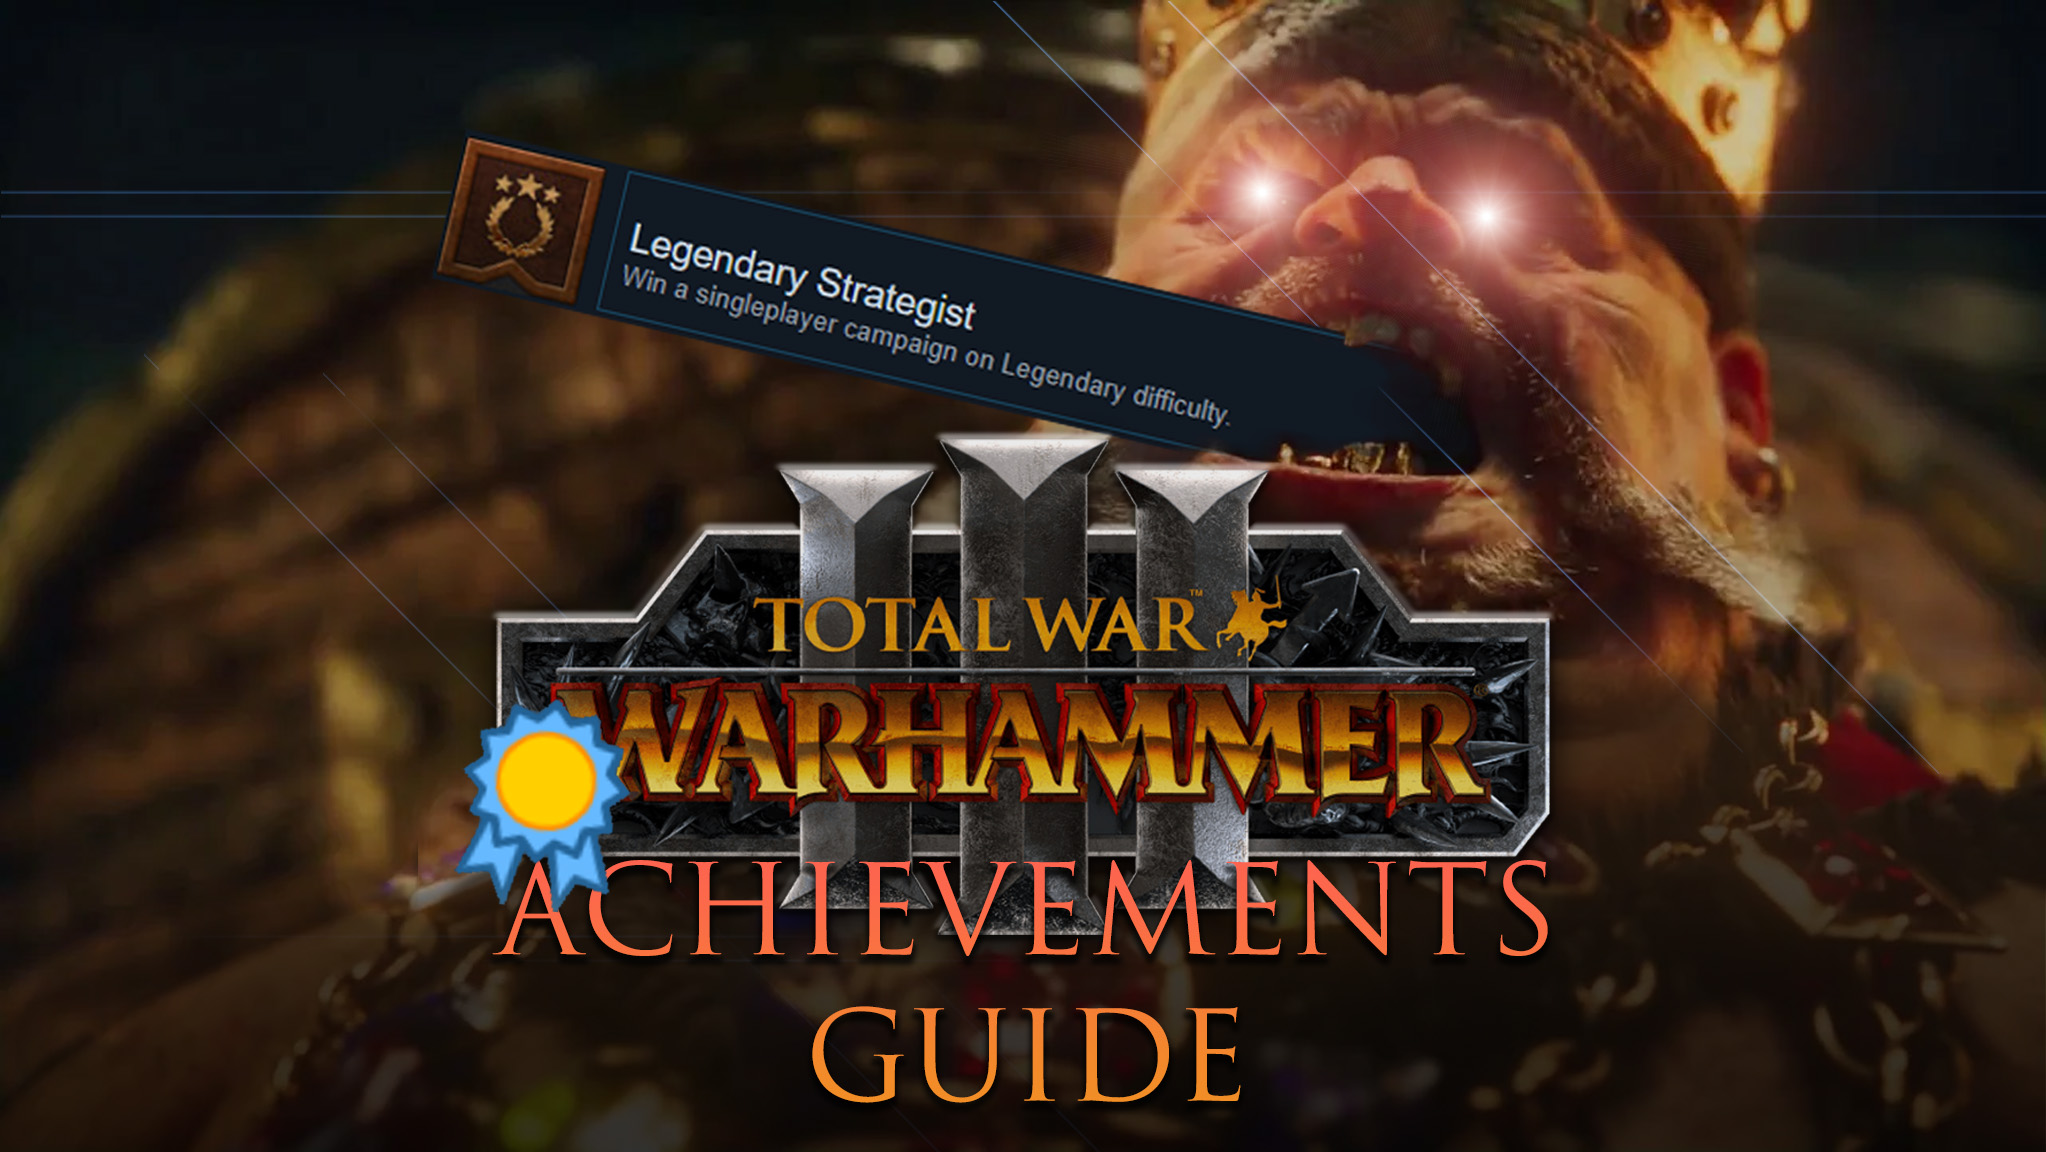 Steam Community :: Guide :: 100% Achievements: A Comprehensive Guide